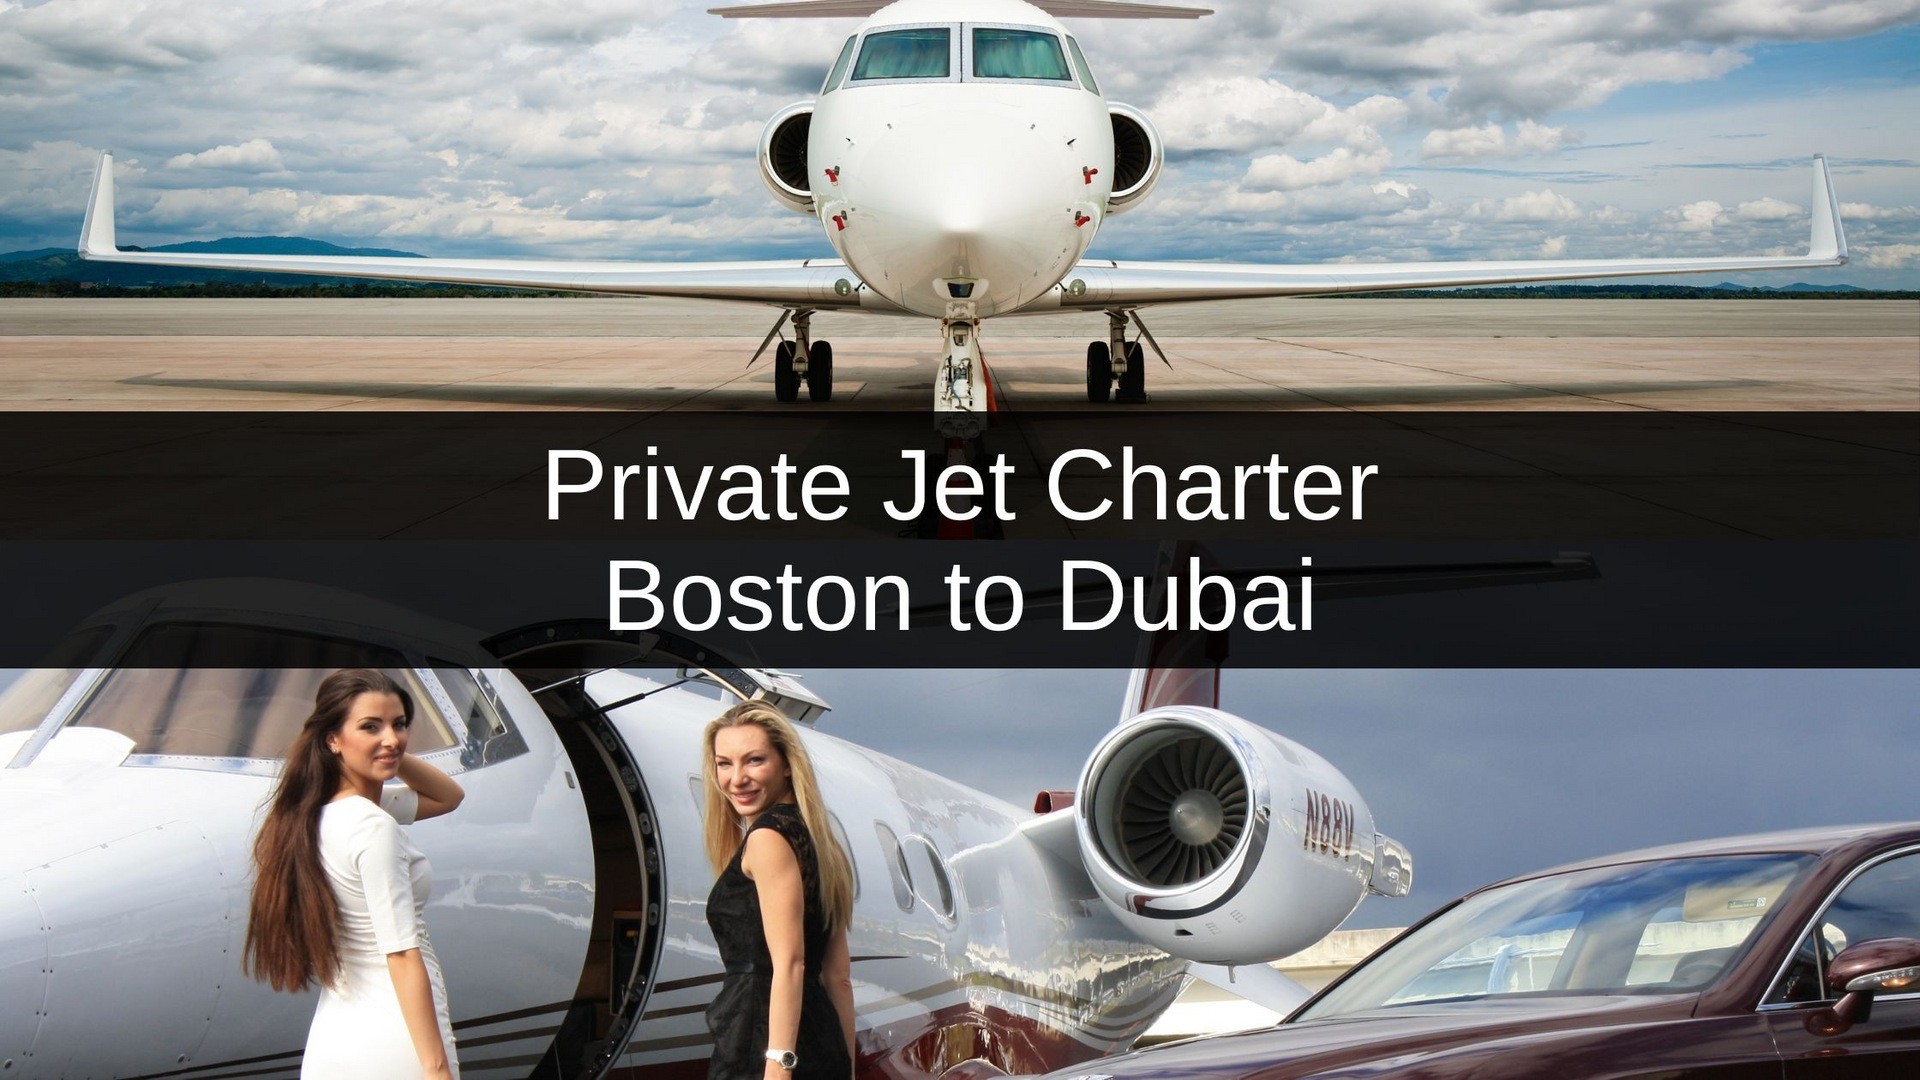 Private Jet Charter from Boston to Dubai